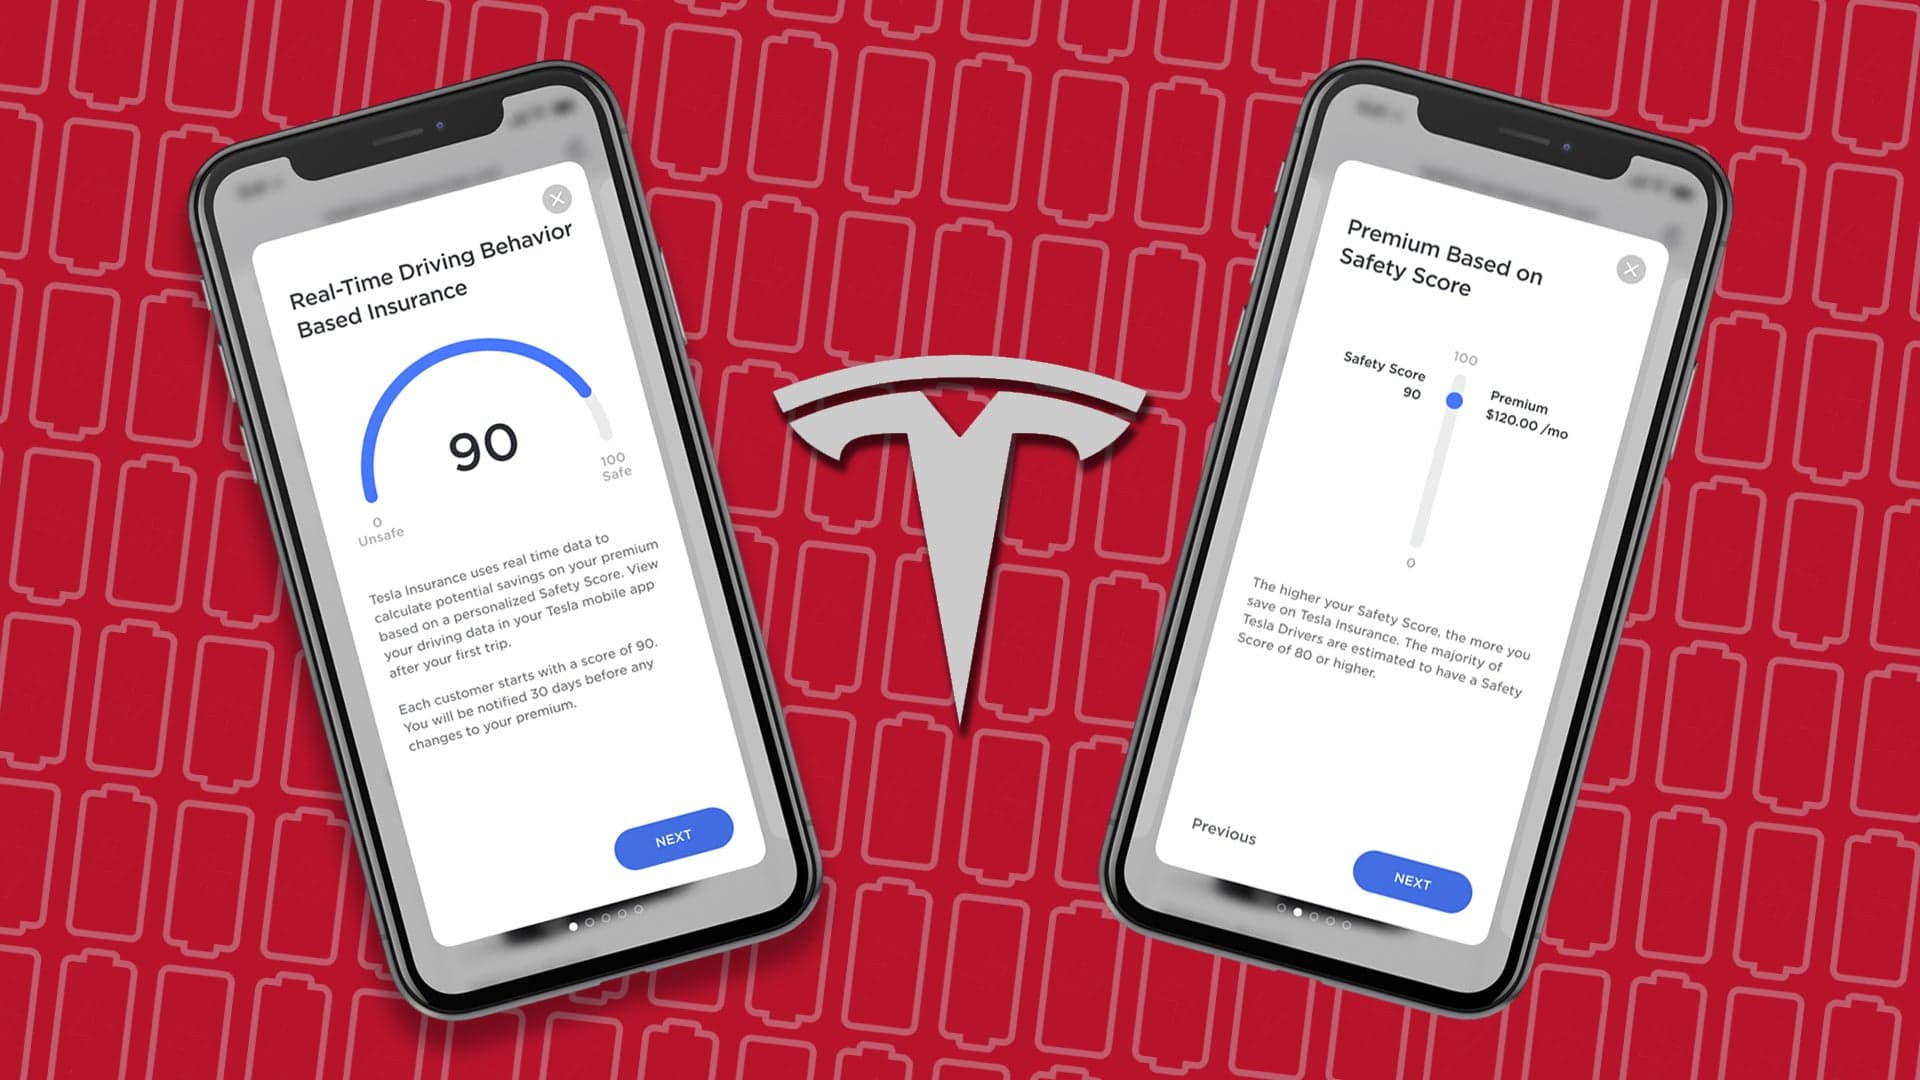 Tesla’s Car Insurance Monitors ‘Real-Time Driving Behavior’ in Texas